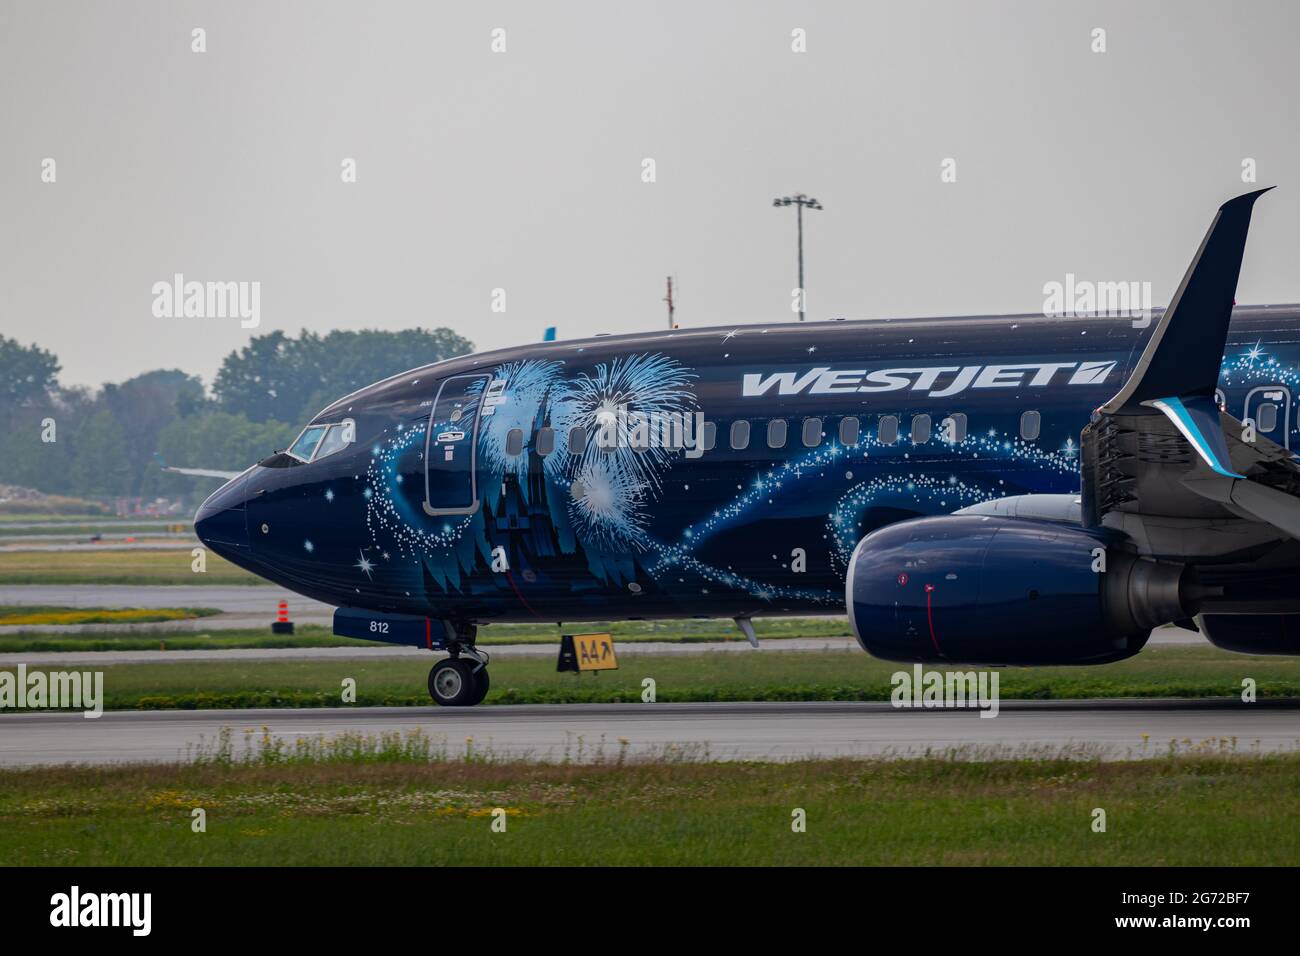 Montreal, Quebec, Canada - 07 07 2021: Westjet's Walt Disney World livery on their 737-8CT landing in Montreal. Registration C-GWSZ Stock Photo